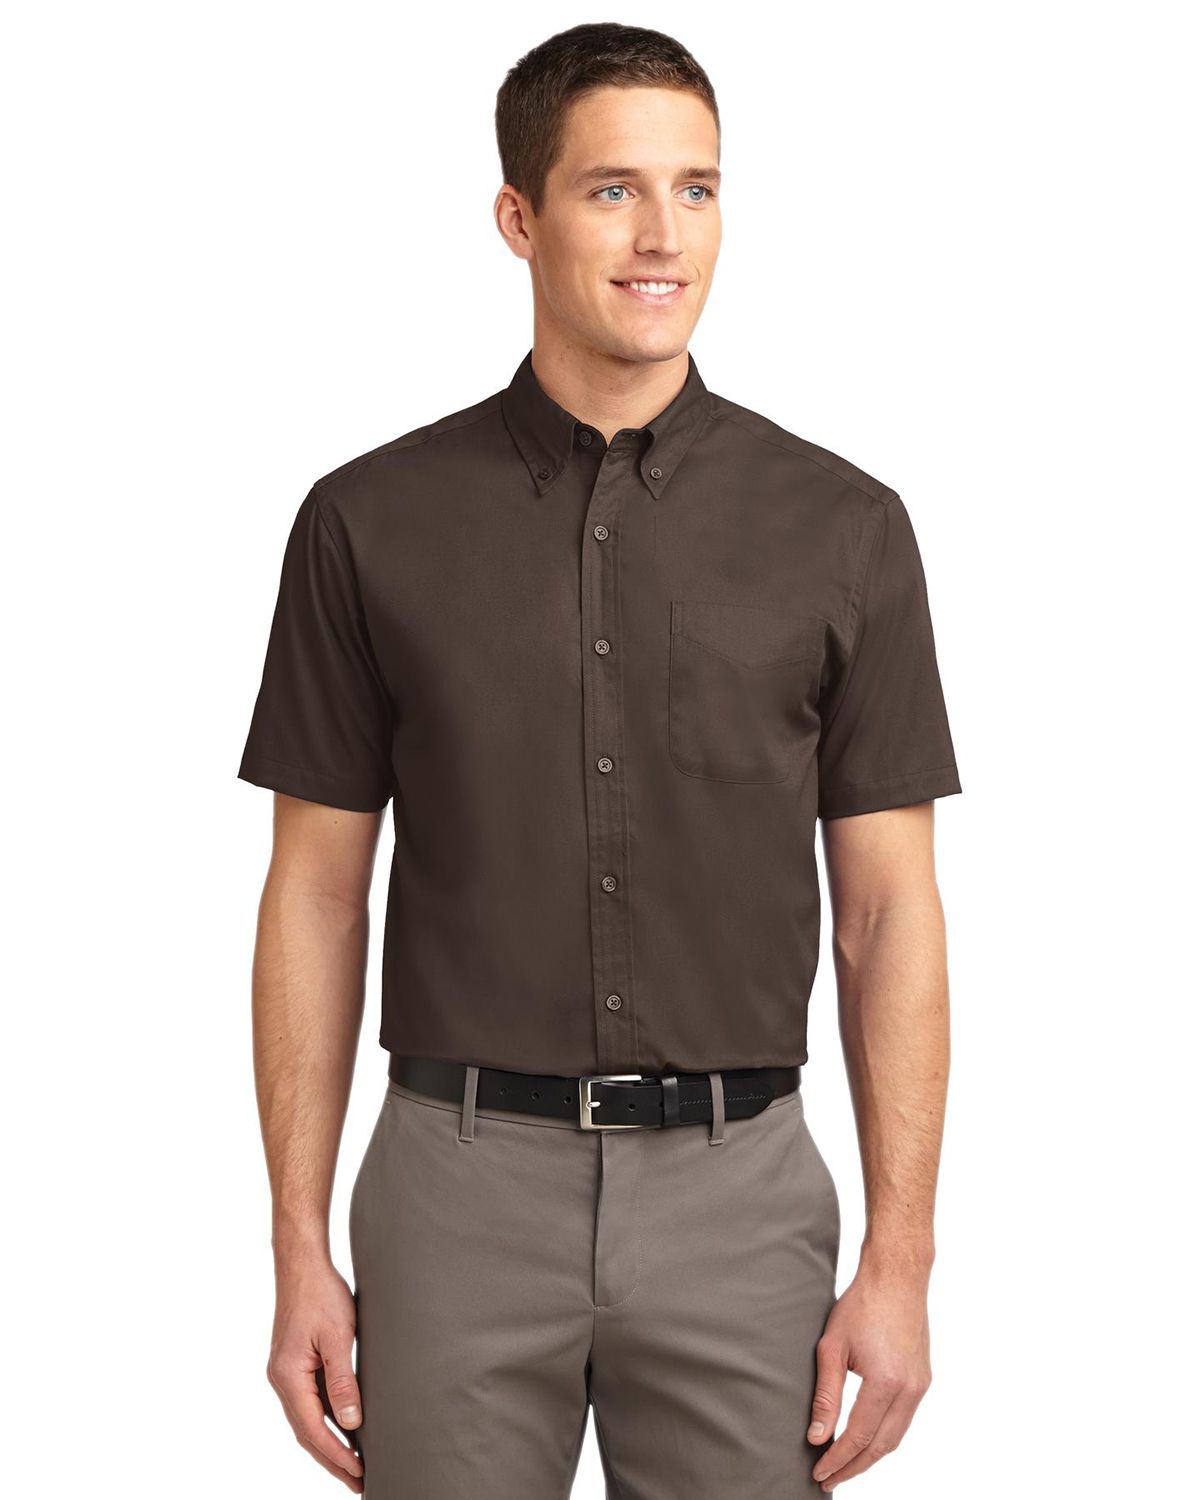 'Port Authority TLS508 Men's Tall Short Sleeve Easy Care Shirt'